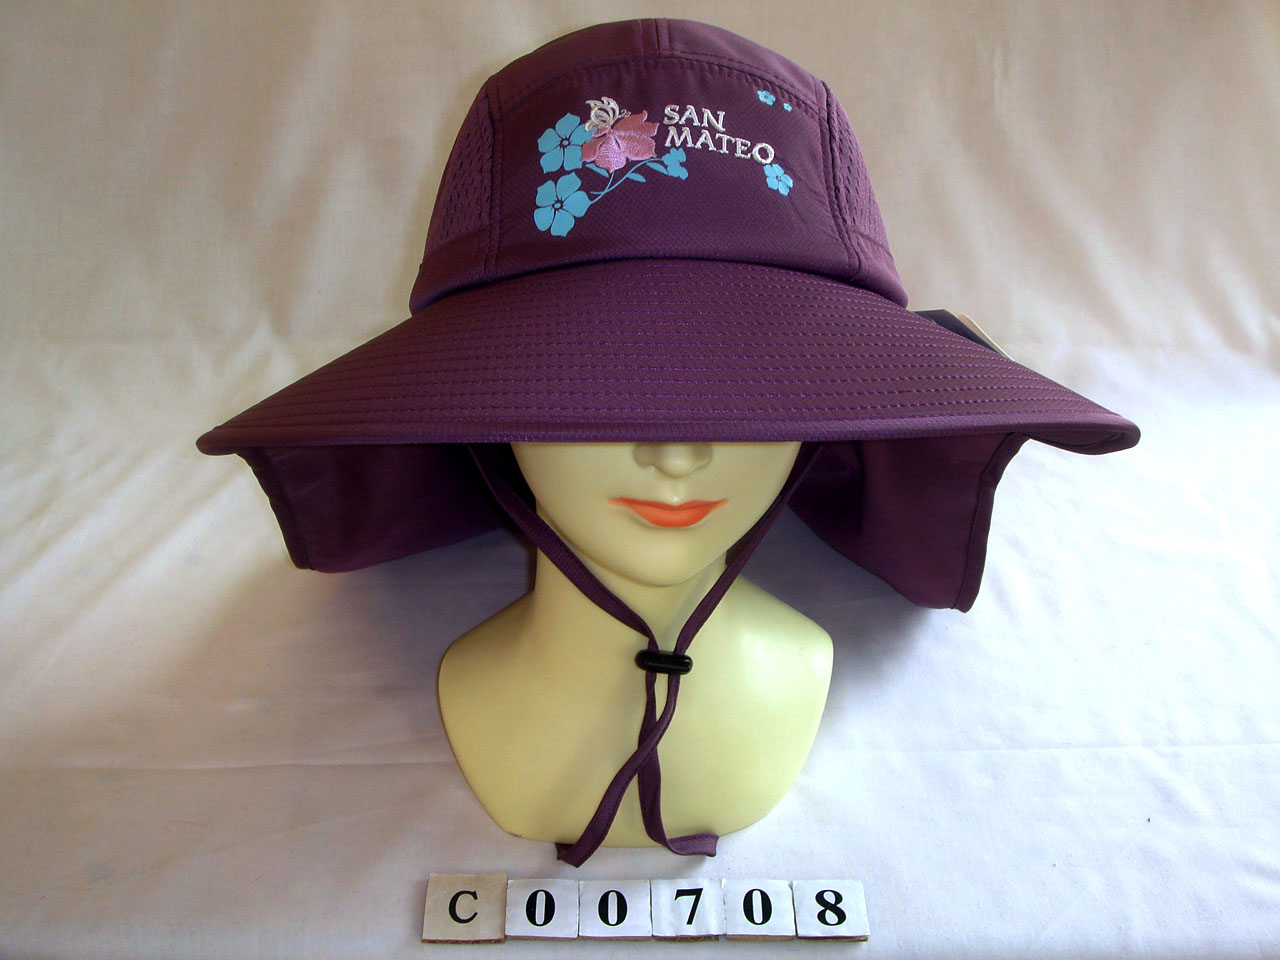 CO0708 深紫 固定式後披 無前披 格子布五片式休閒帽 電繡花與SAN MATEO 三星製帽